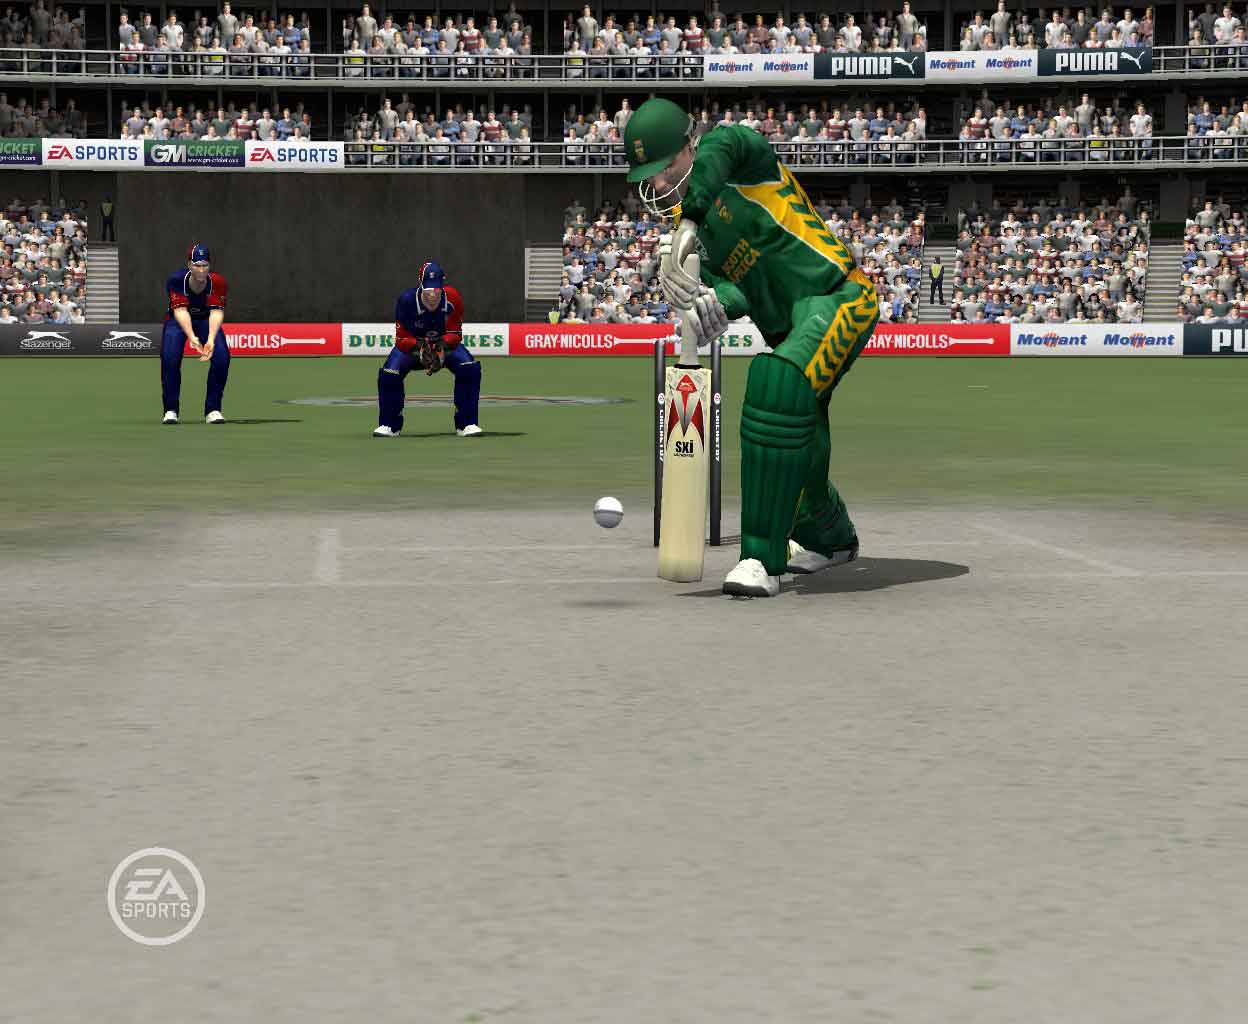 ea sports cricket game in development